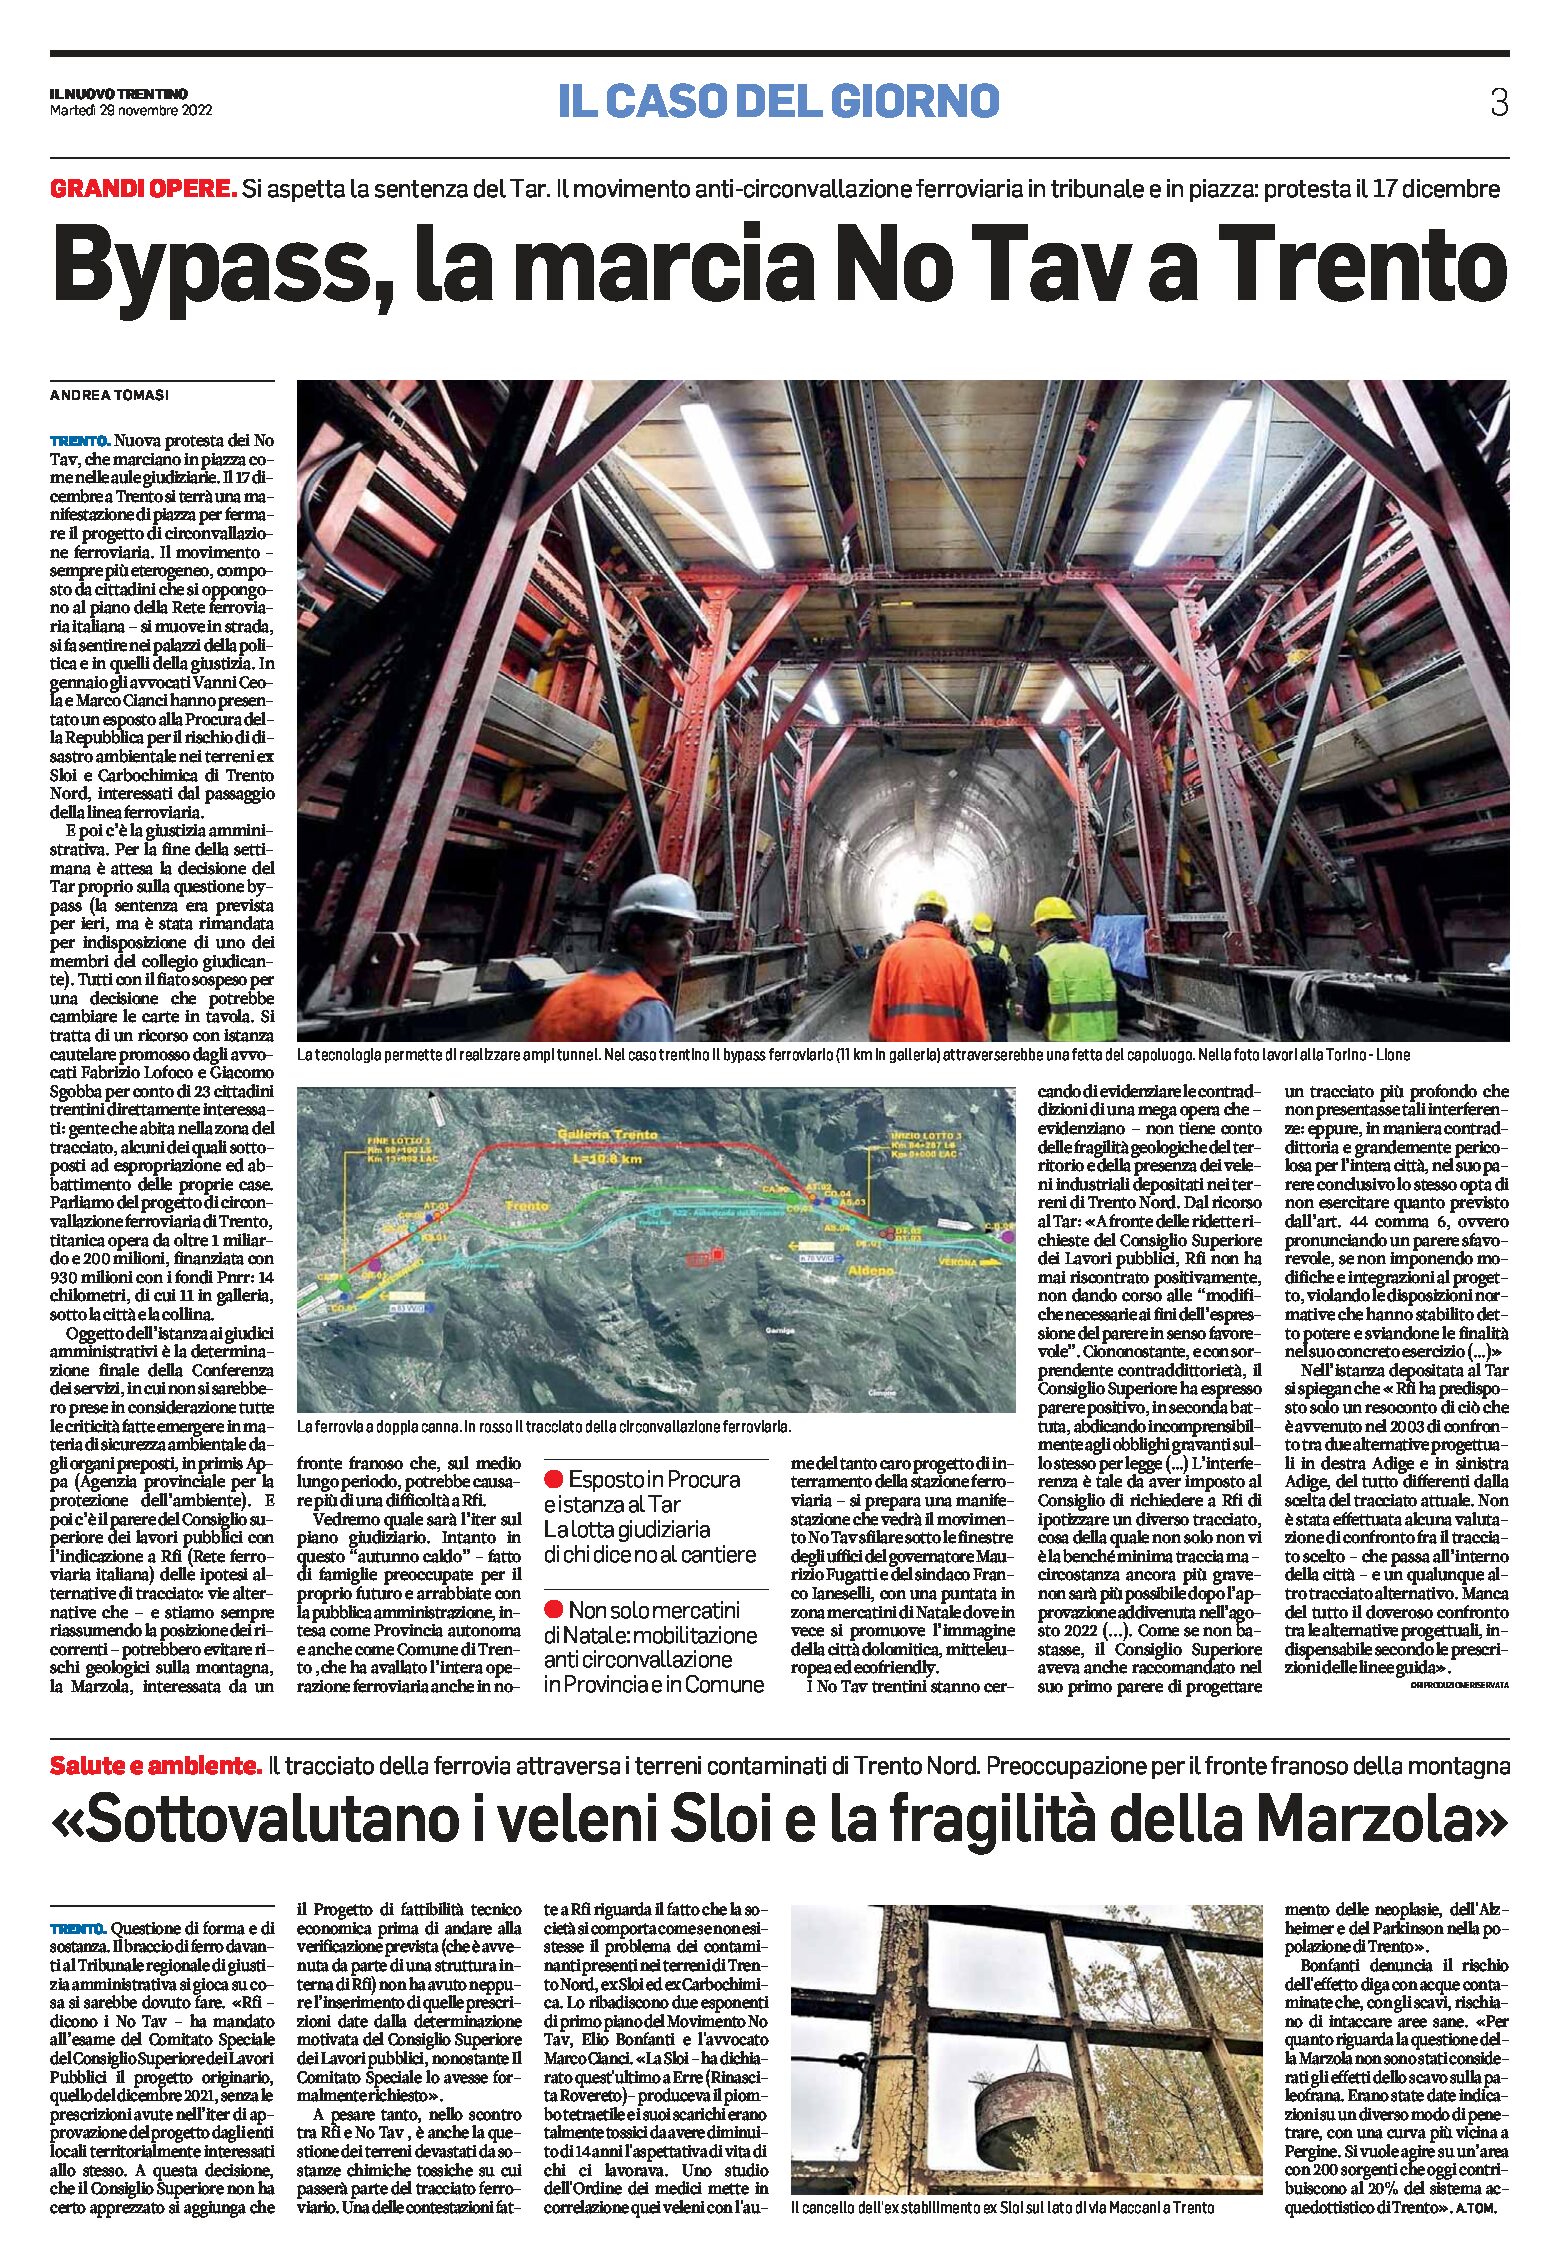 Bypass ferroviario: la marcia No Tav a Trento